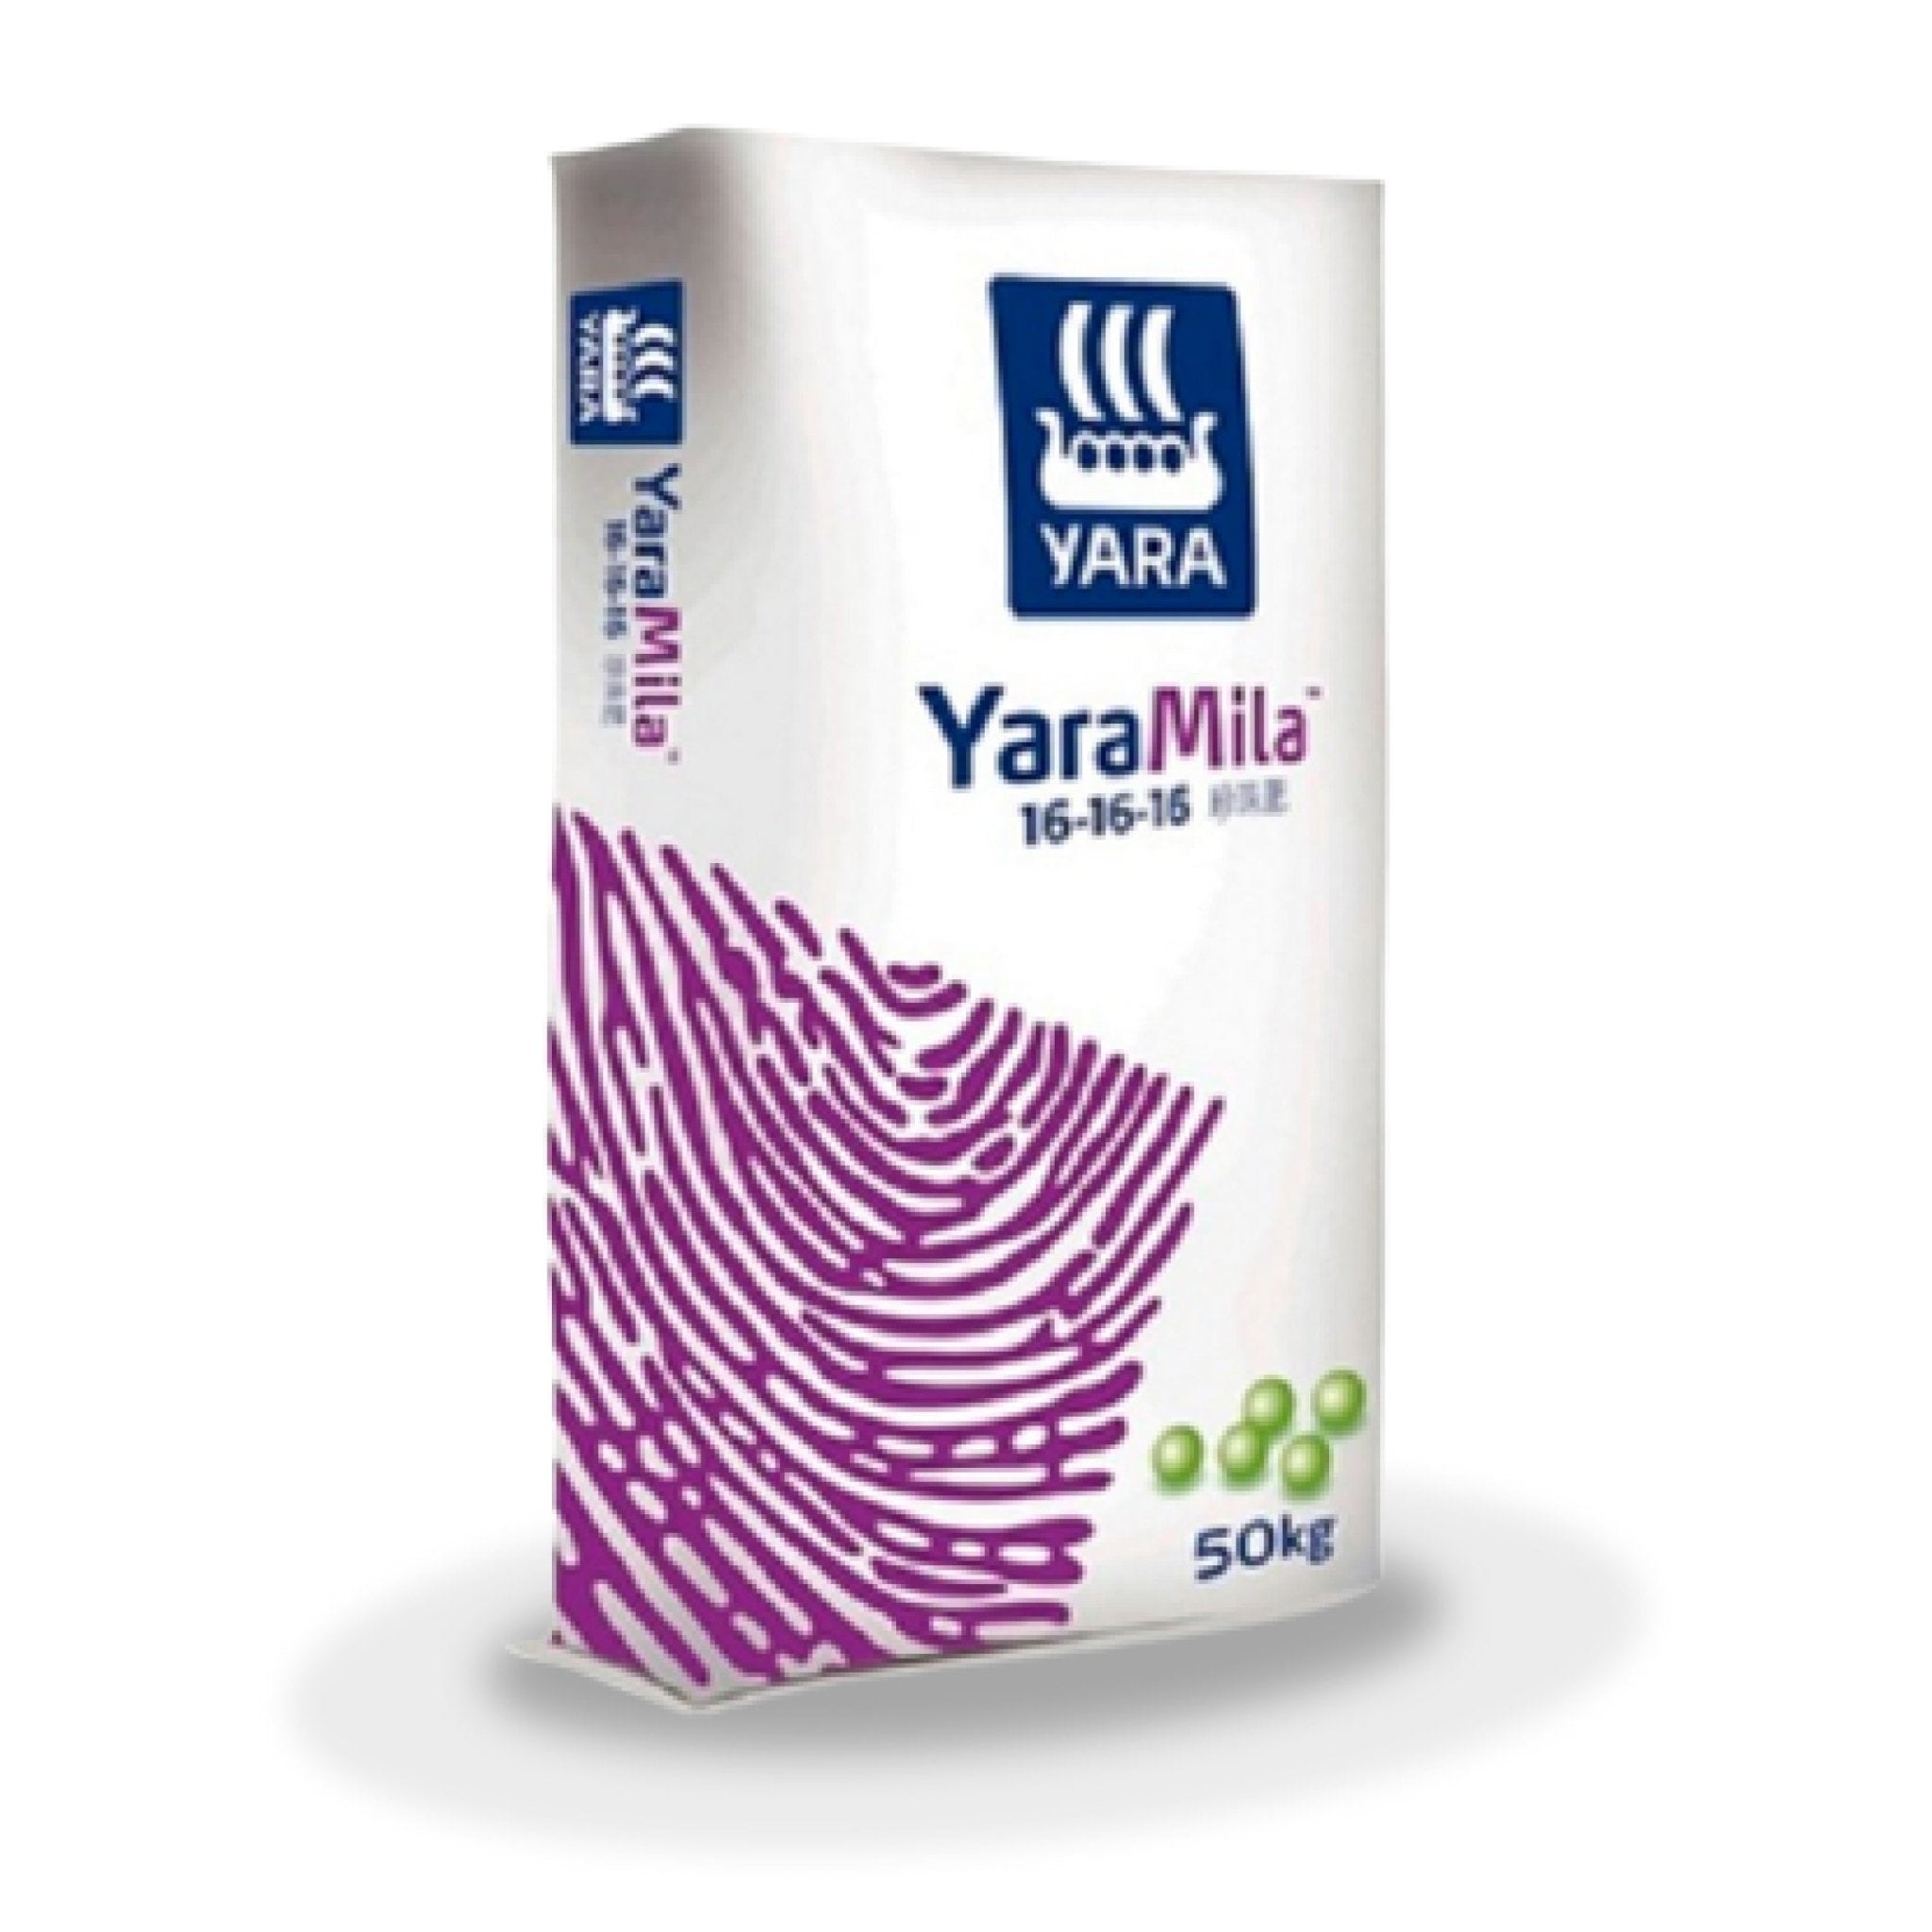 YARAMILA Fertilizer Baja 161616 - 1kg Repack & 50 kg (100% Original) - Farm Doktor